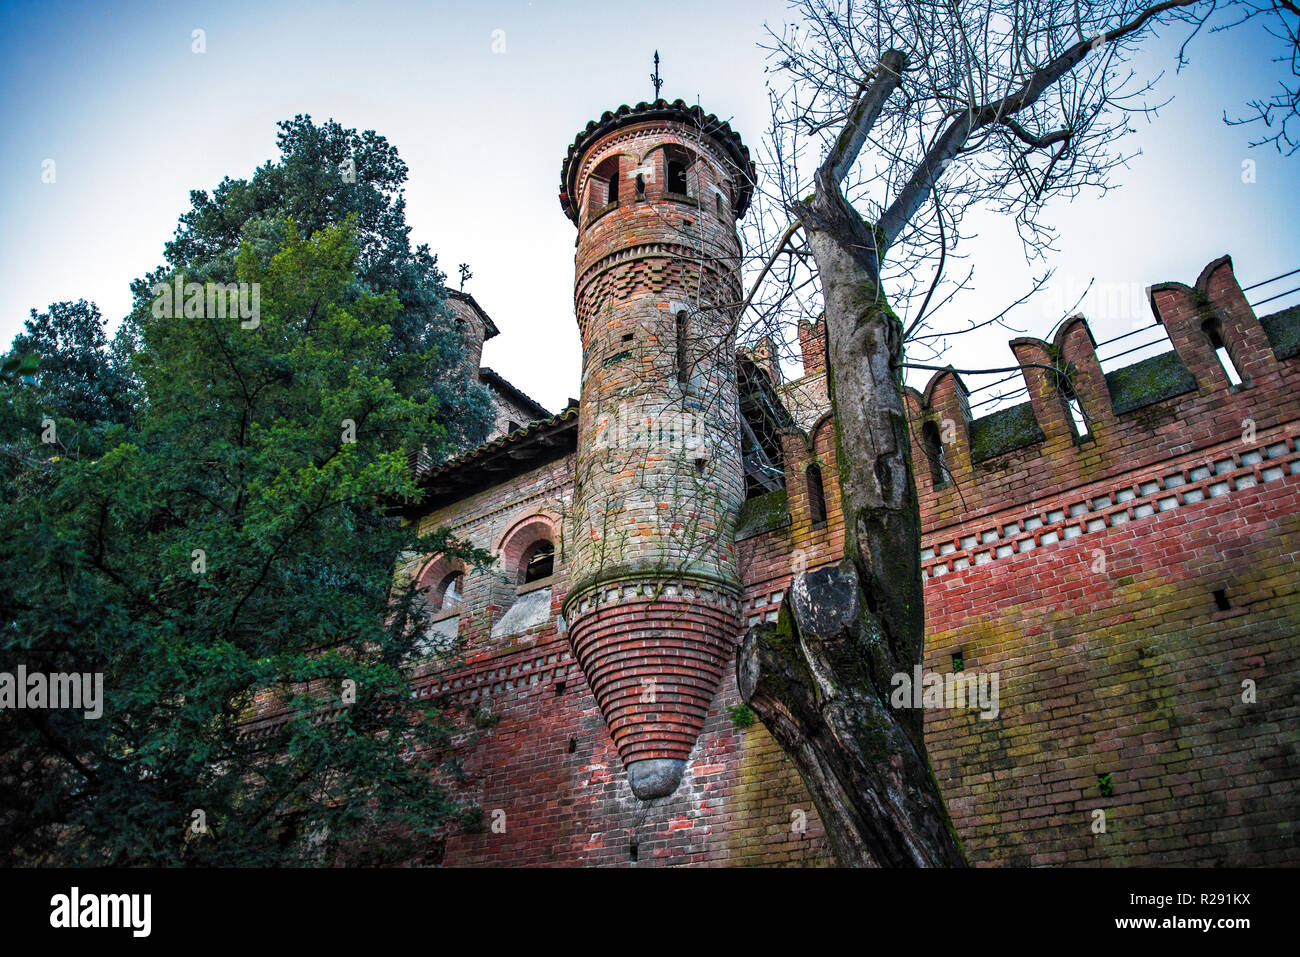 Gabiano castle in Piemonte, Italy. Stock Photo